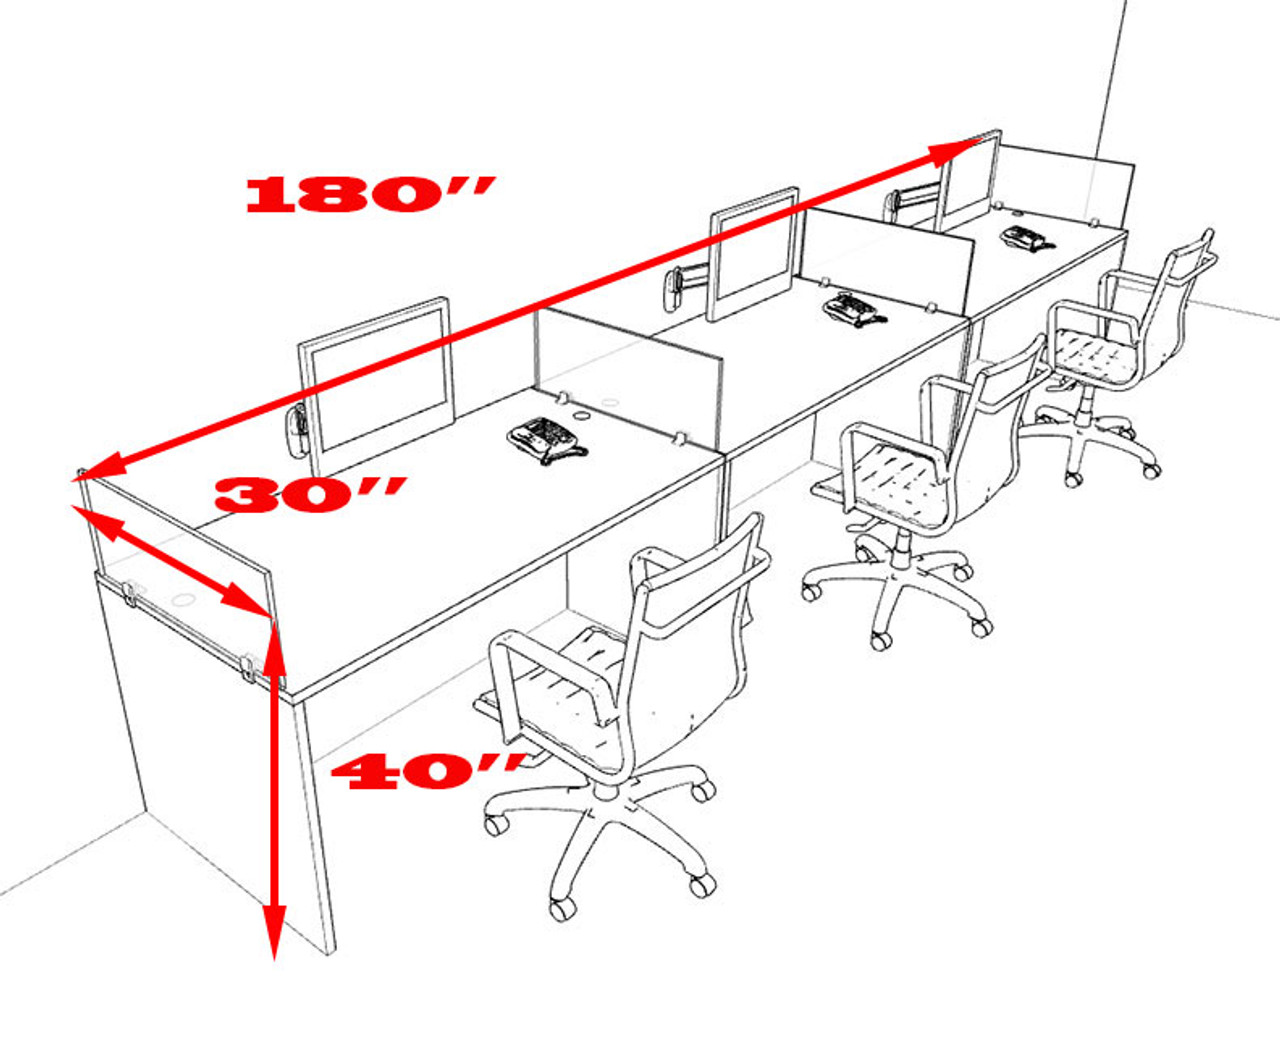 Three Person Modern Accoustic Divider Office Workstation Desk Set, #OT-SUL-SPRG8